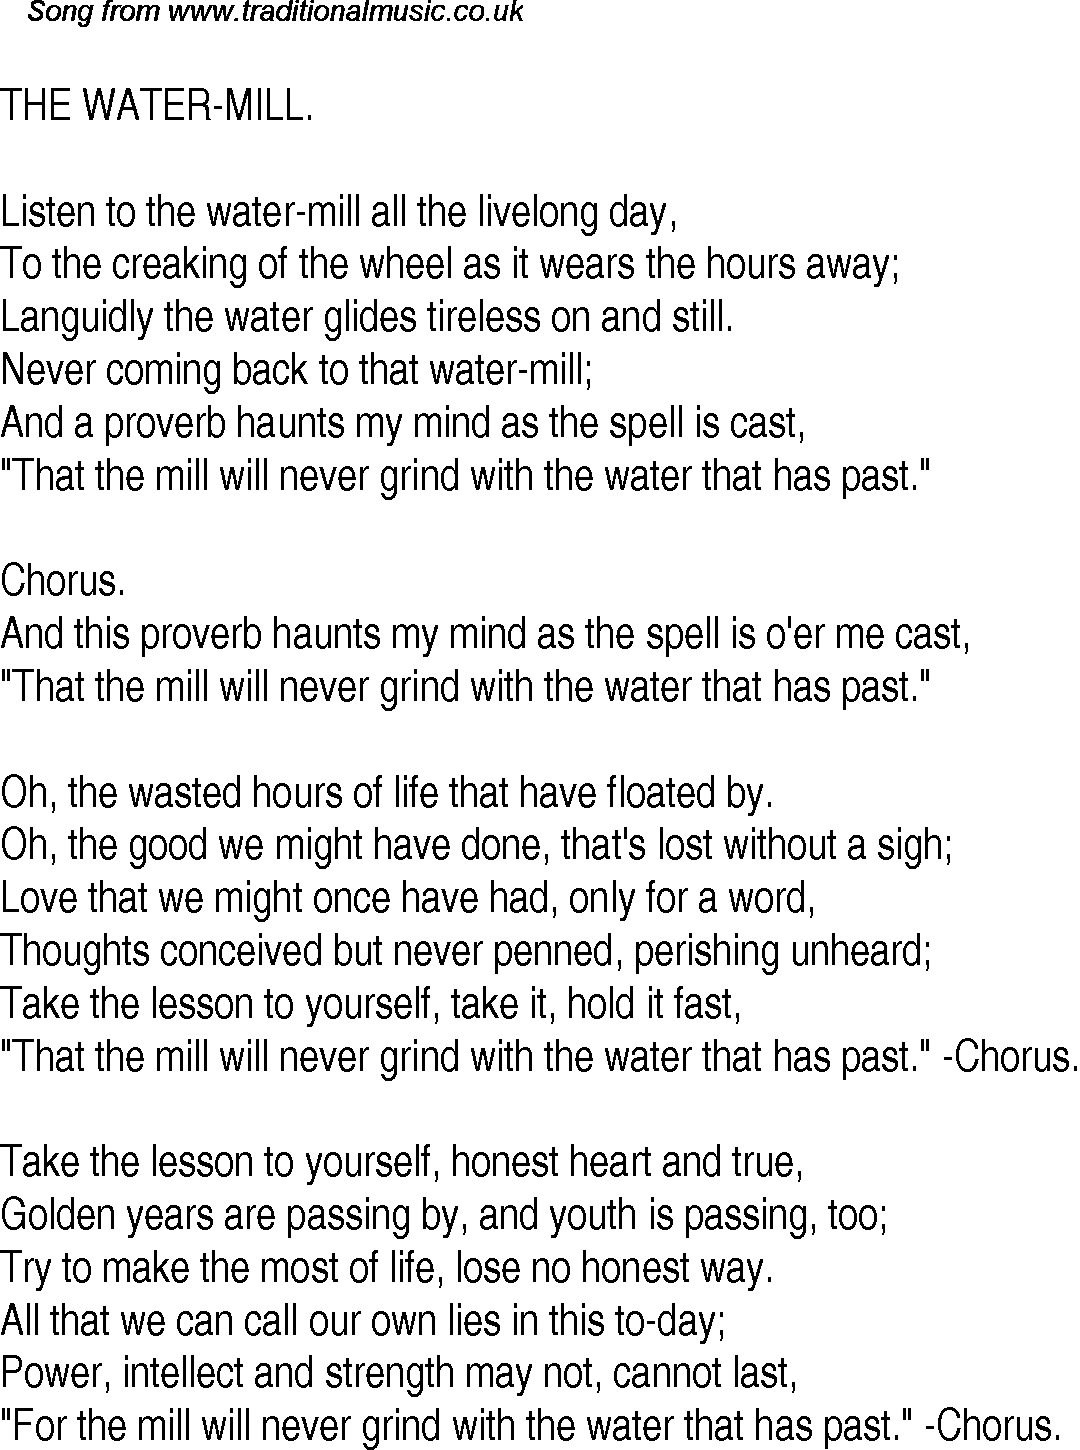 Eminem Lose Yourself Lyrics Pdf